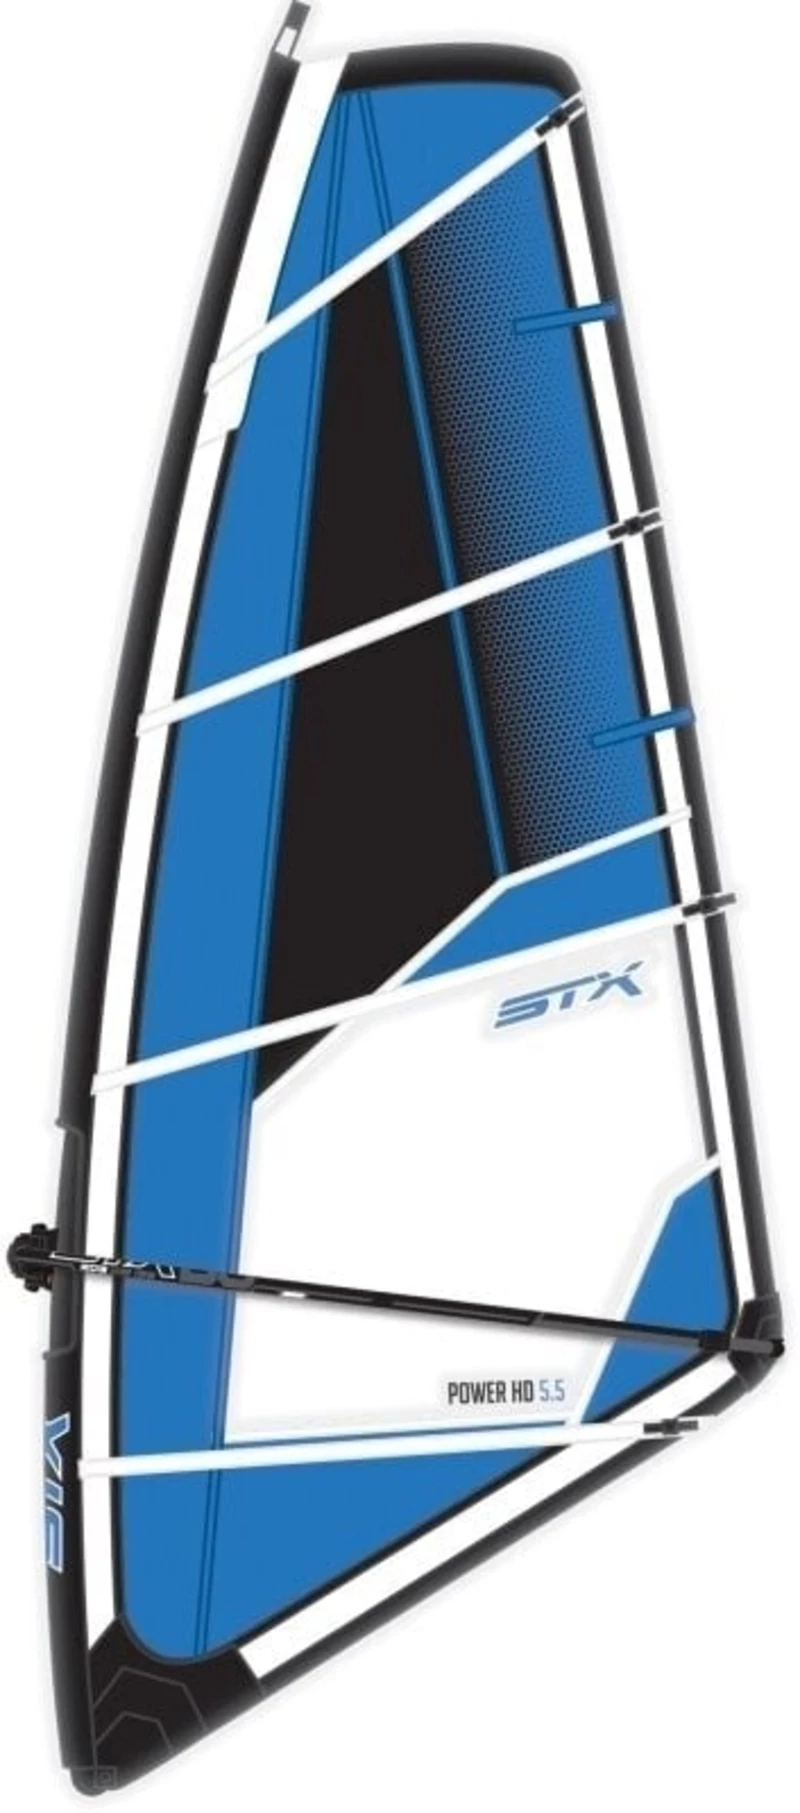 STX Plachta pro paddleboard Power HD Dacron 5,5 m² Modrá